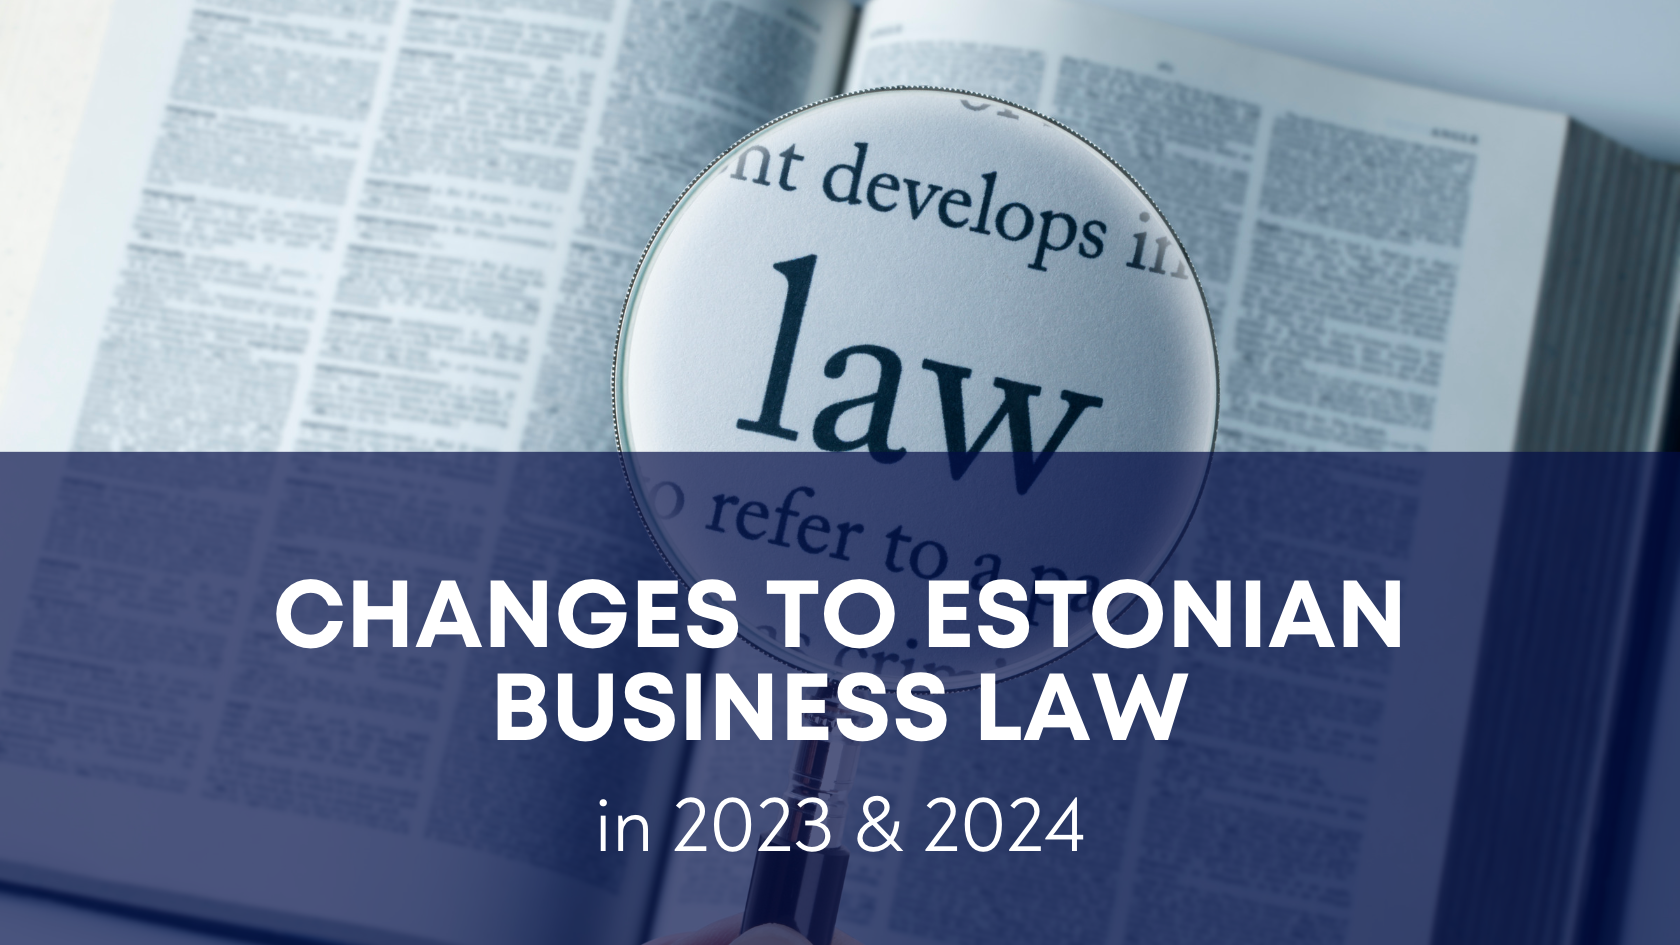 Changes to Estonian commercial code, Estonian business law changes